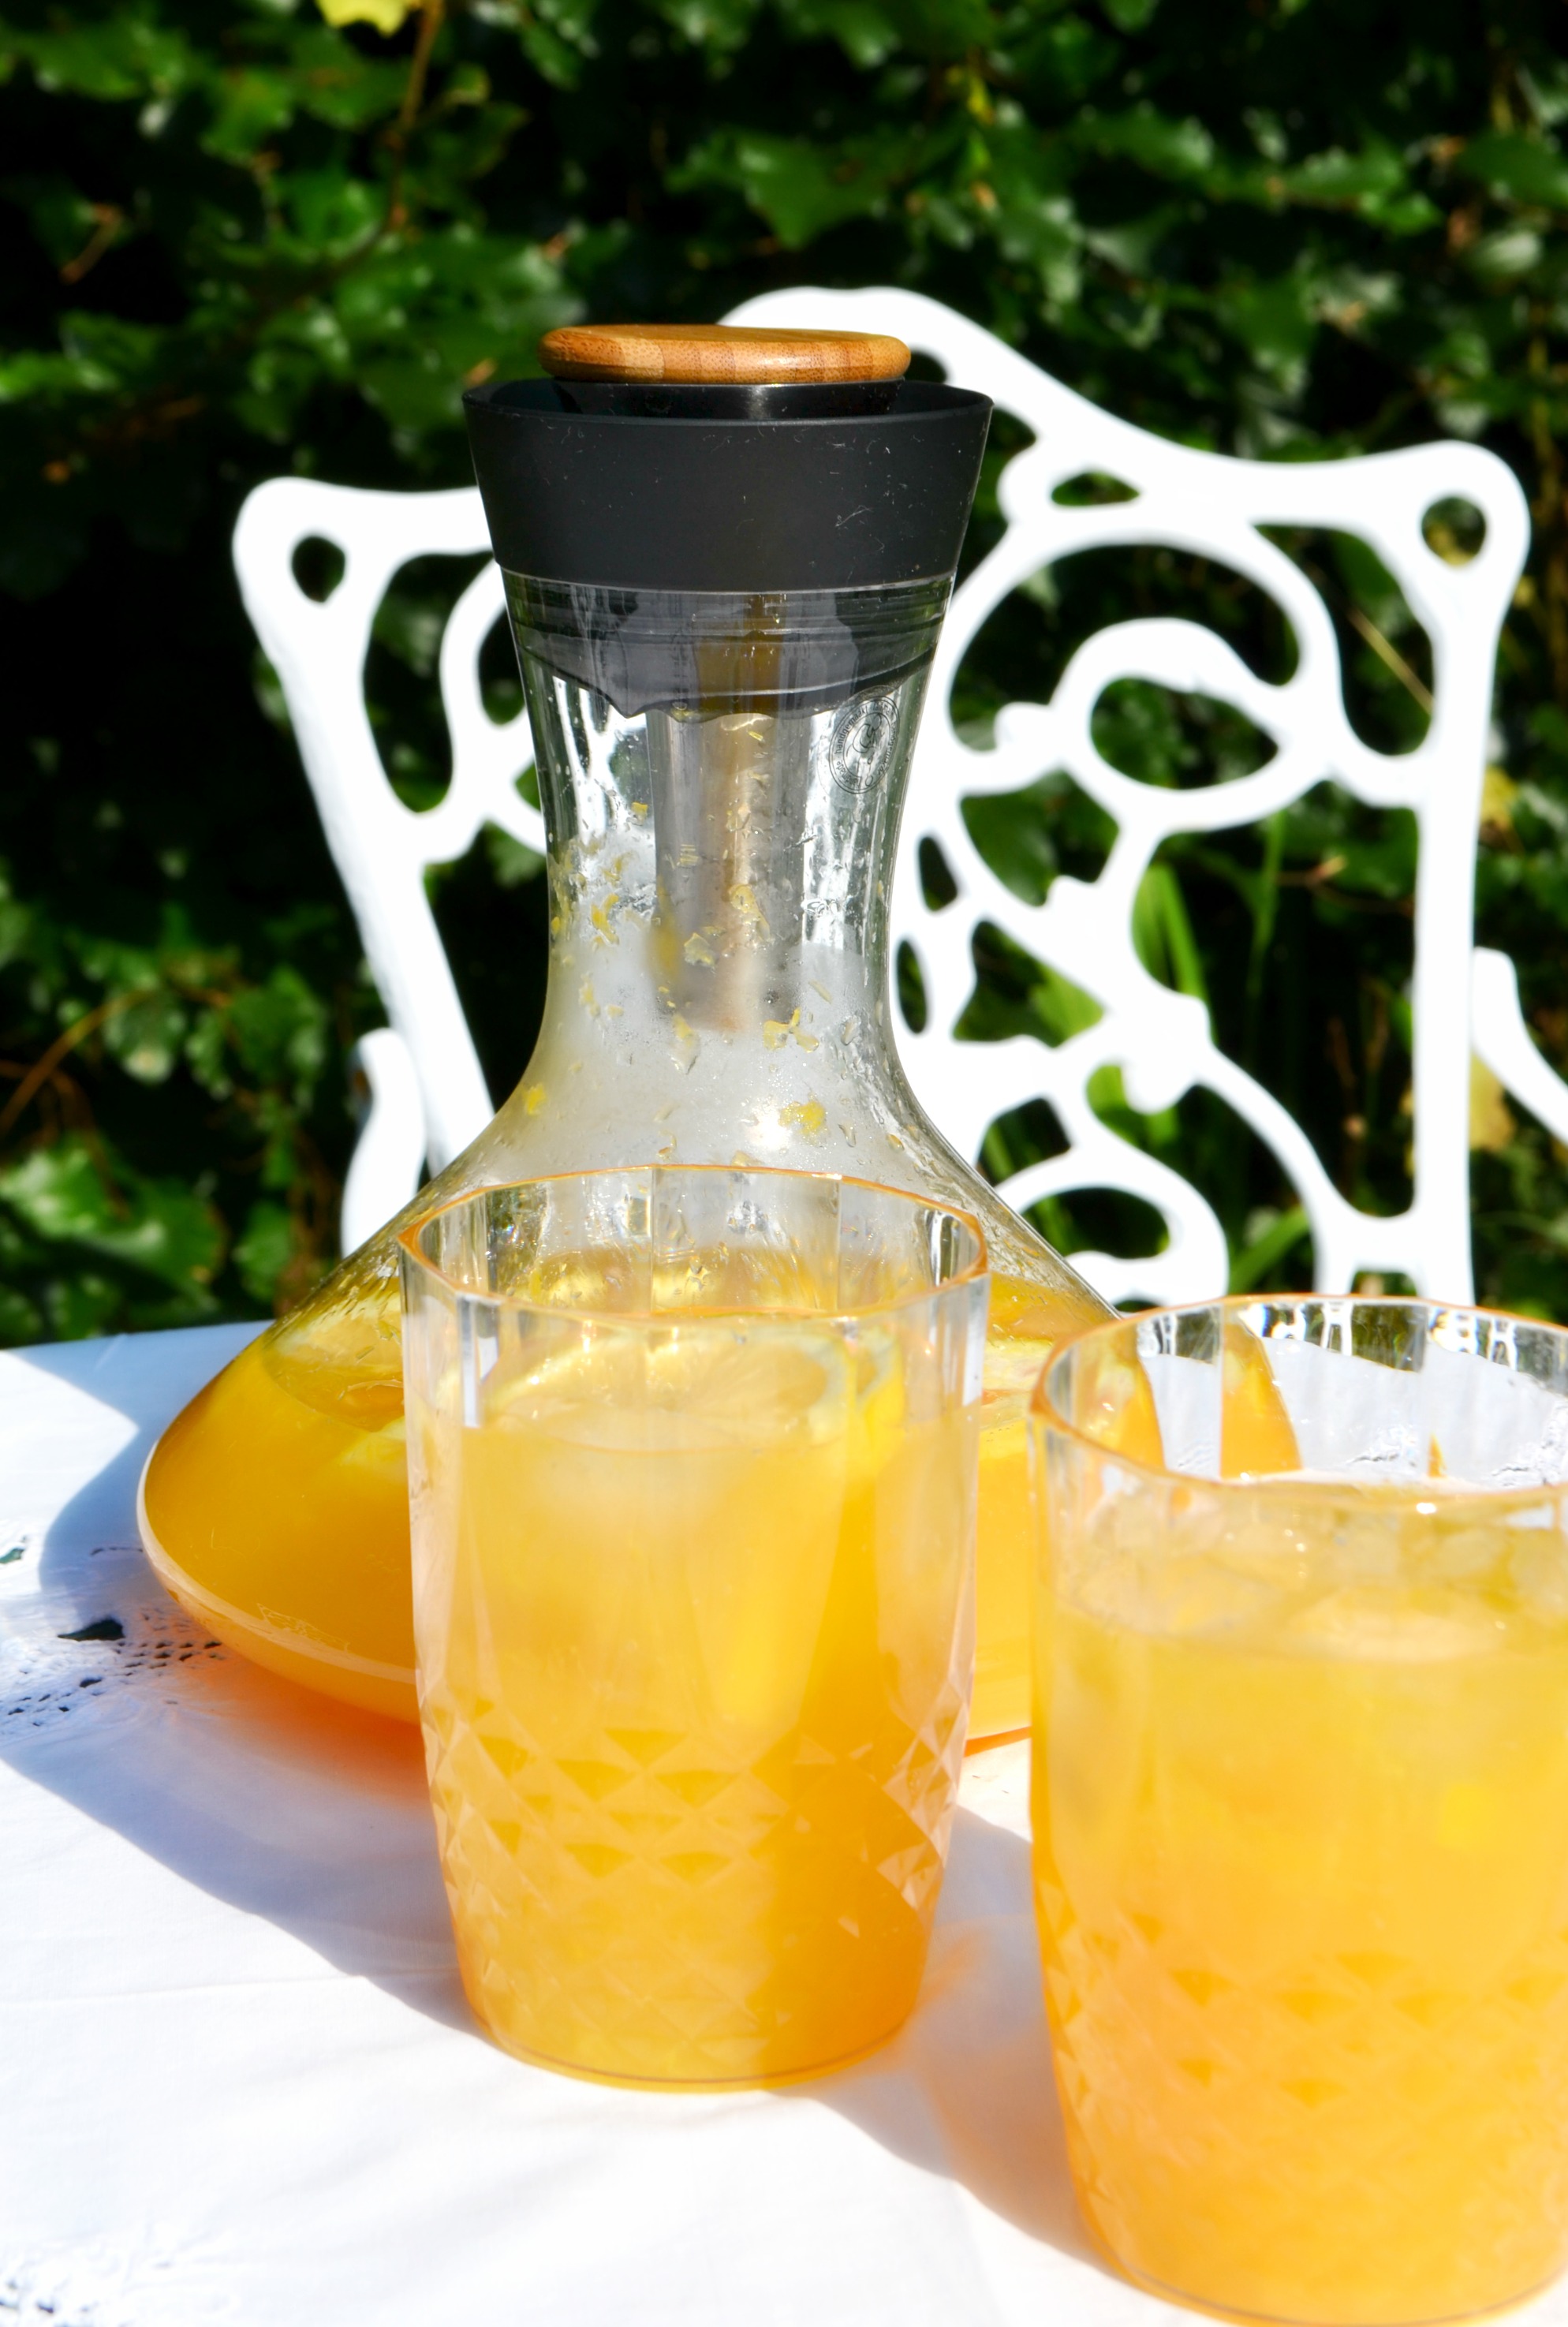 Juicyday: Selfmade Limonade 2.0 - Selbstgemachte Orangenlimonade.